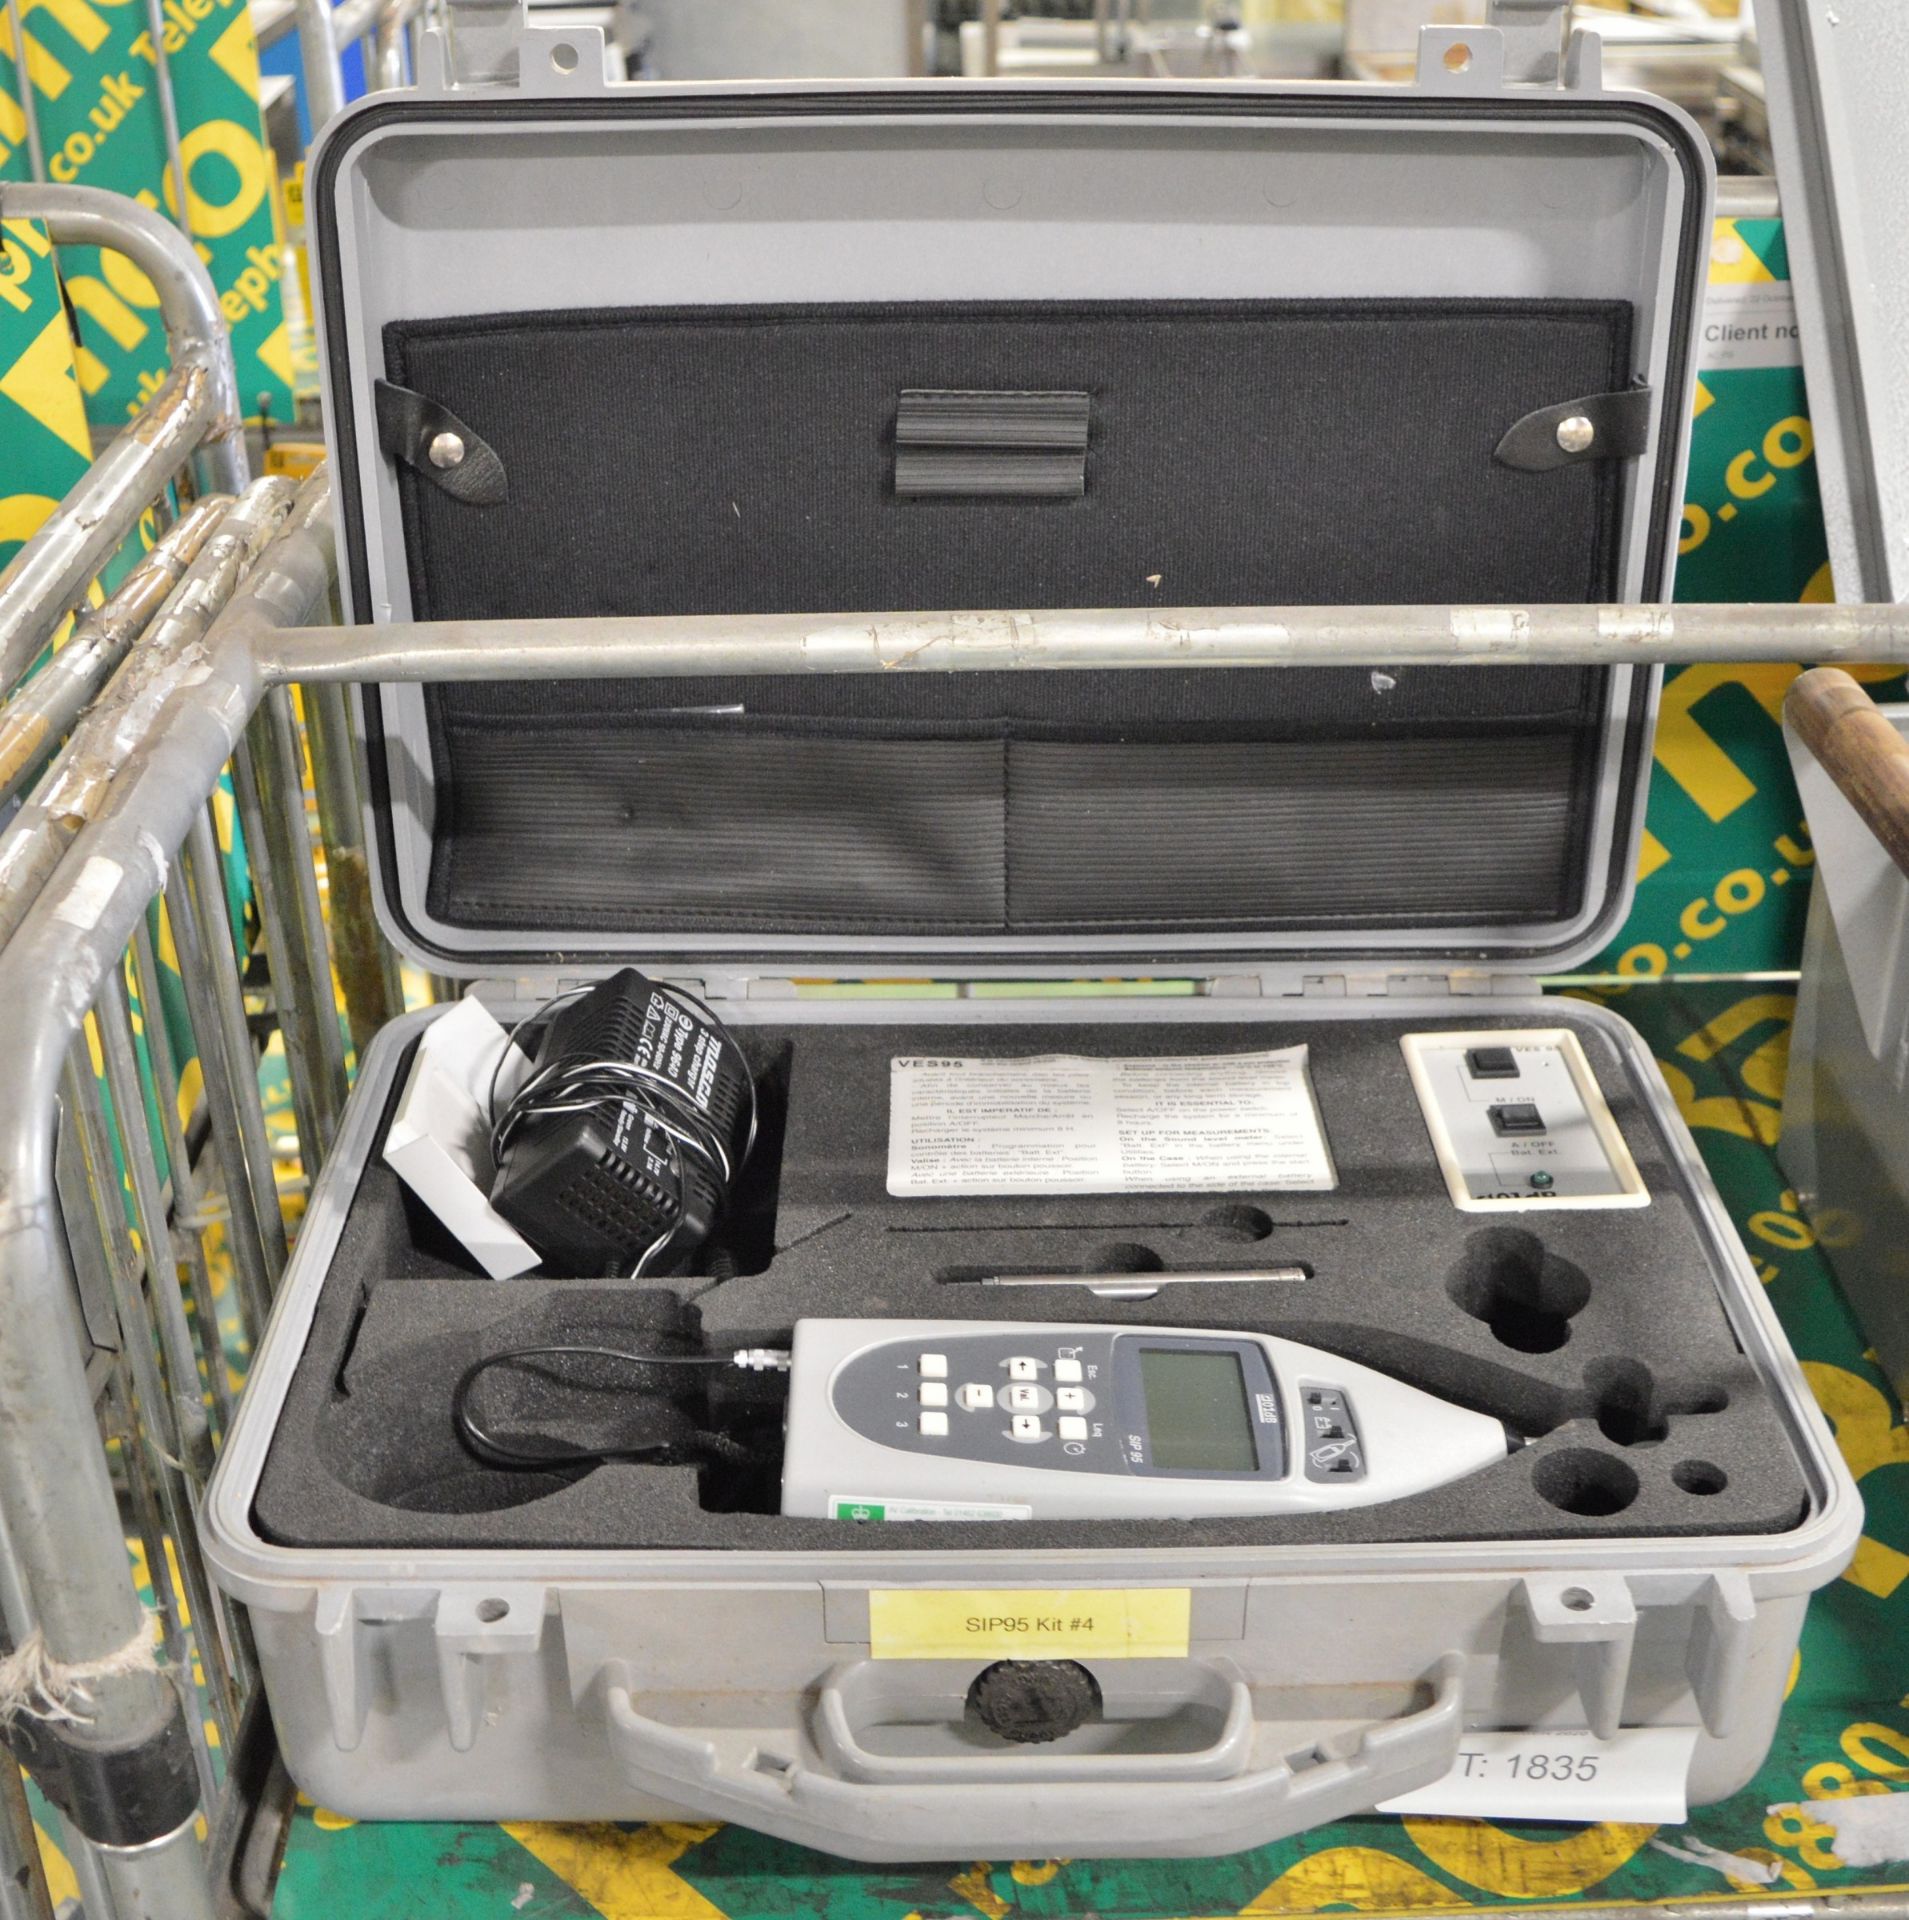 Sonometre Sound level meter SIP95 in case